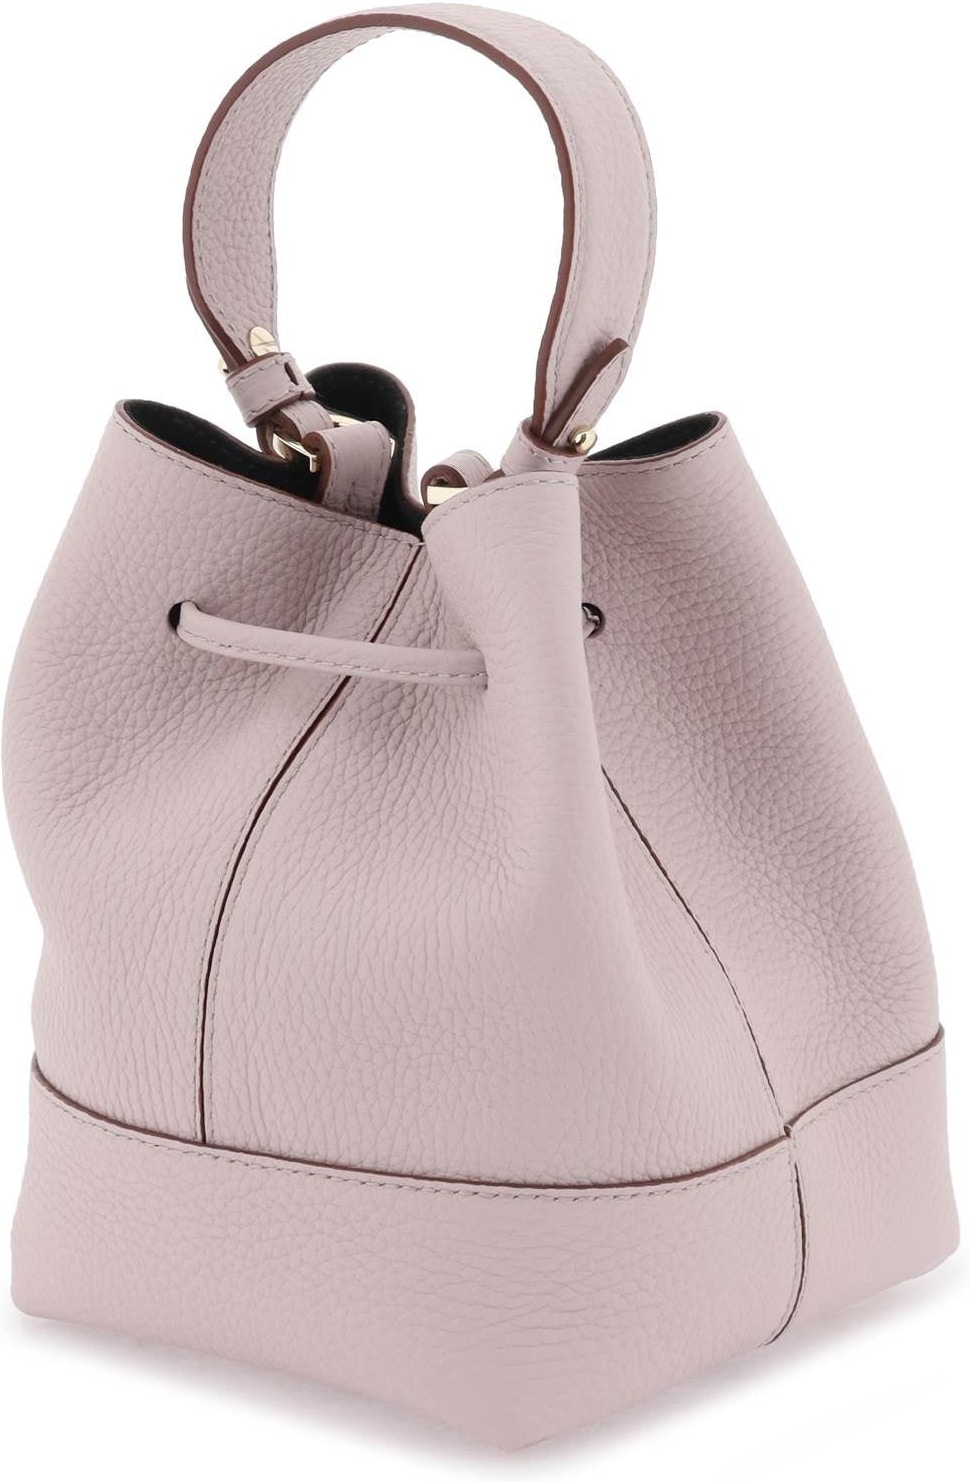 Strathberry - Lana Osette - Leather Mini Bucket Bag - White